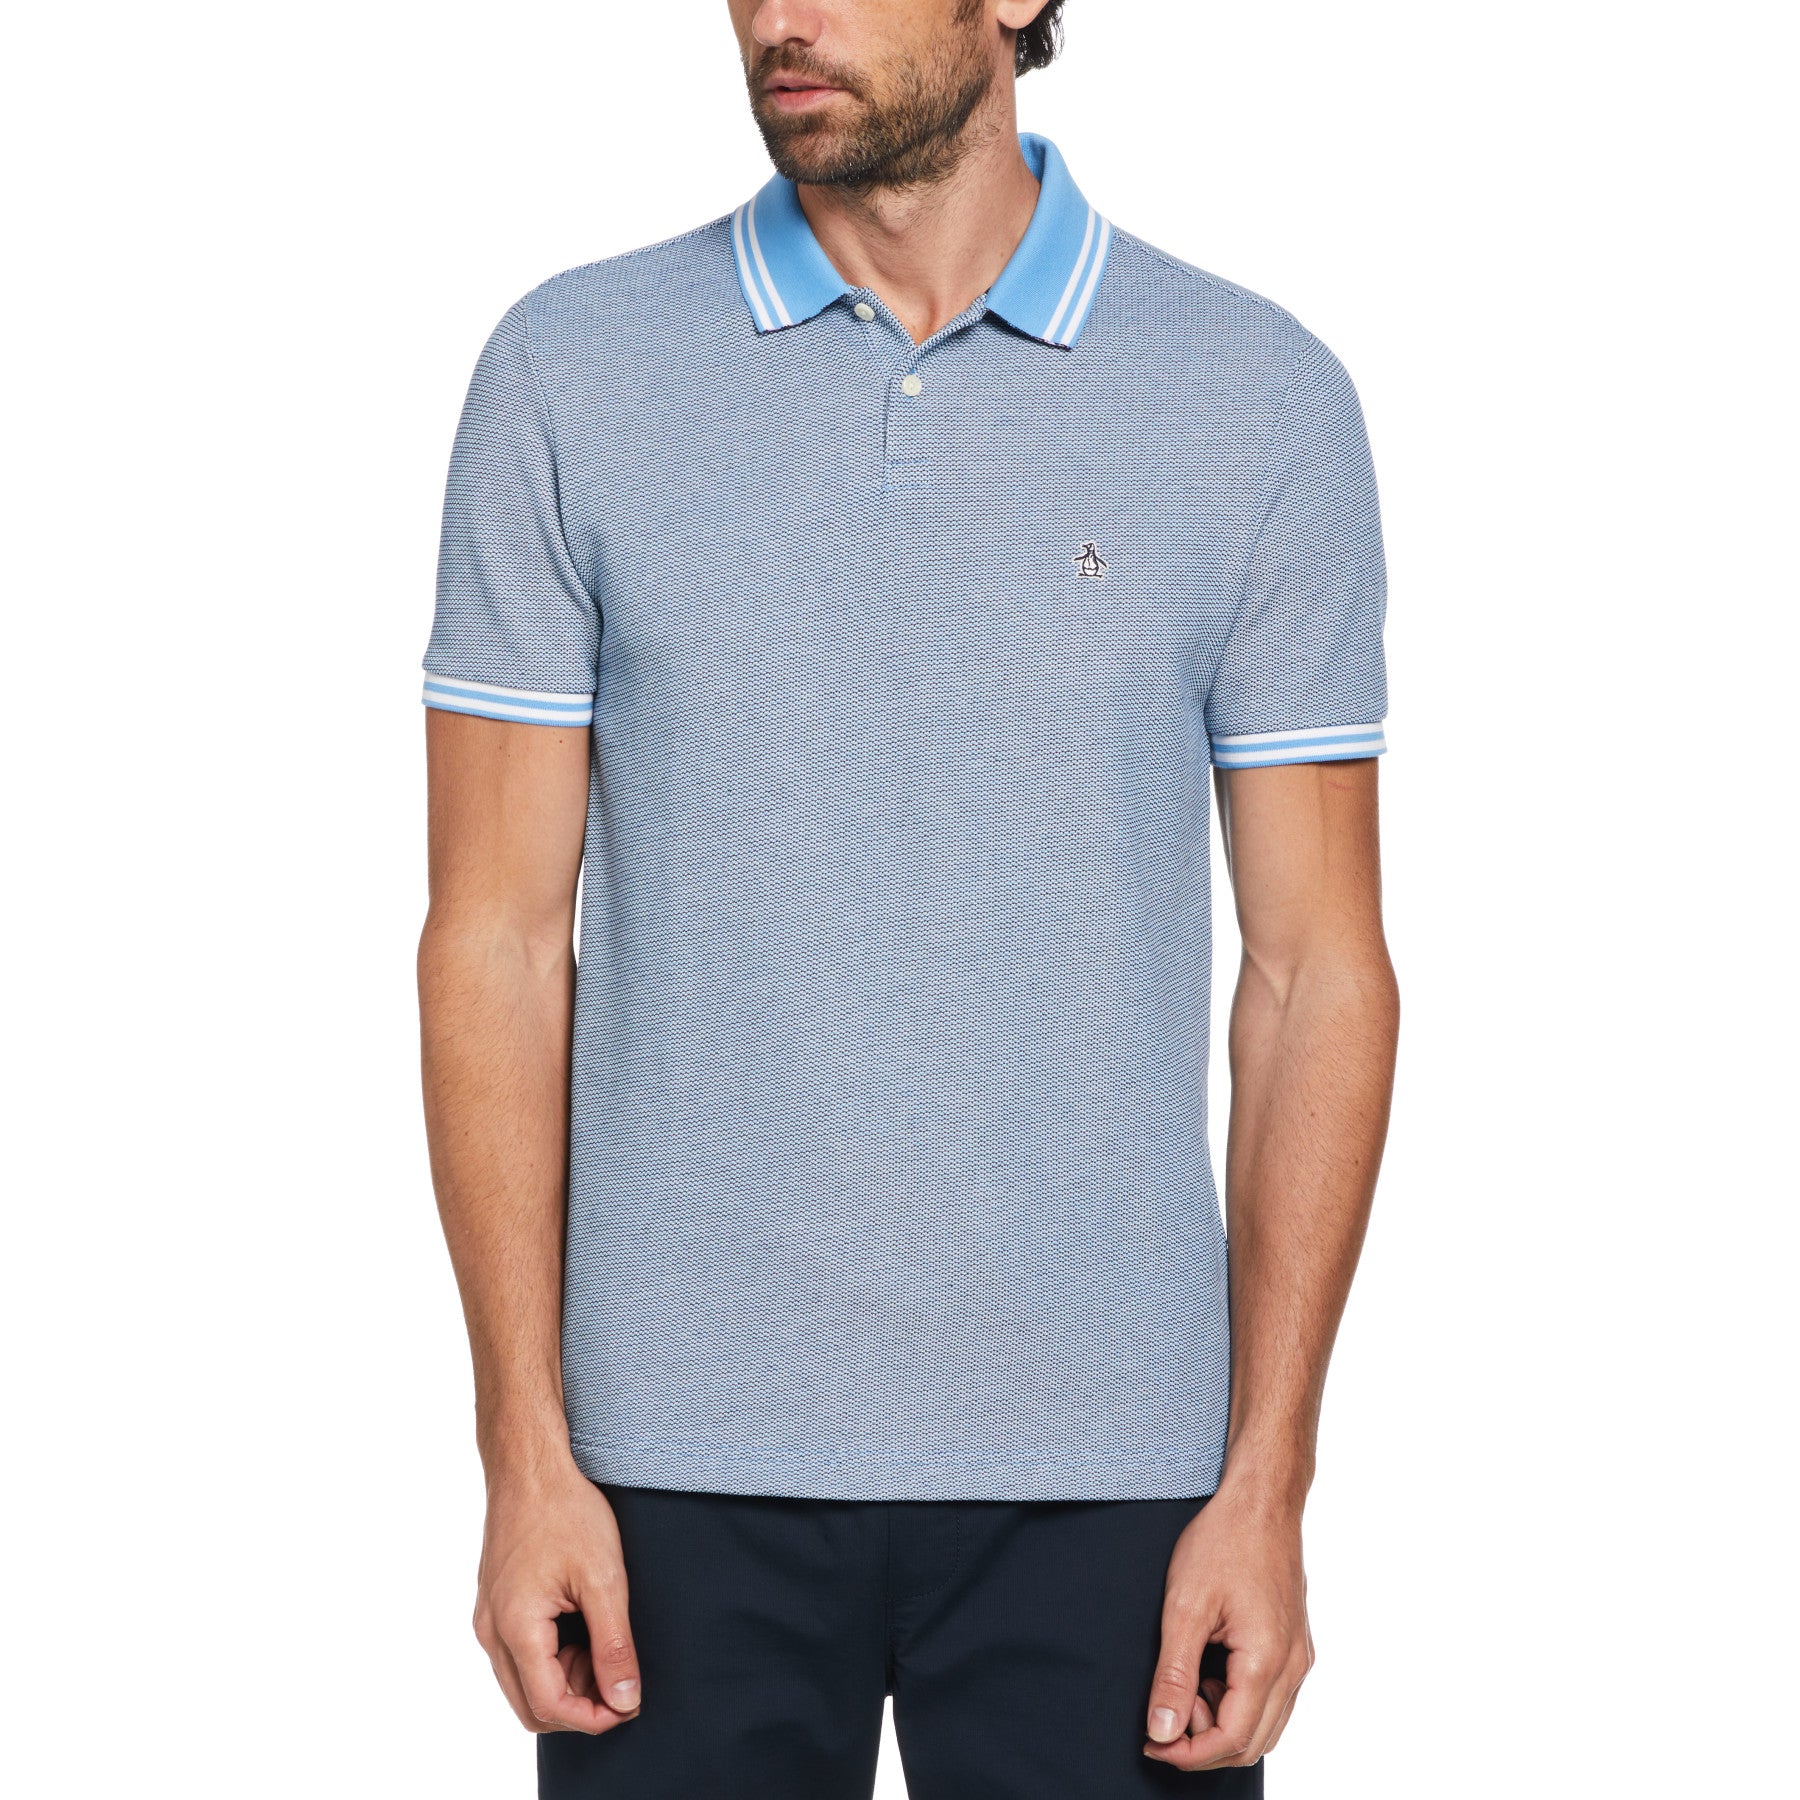 View Short Sleeve Birdseye Polo Shirt In Azure Blue information